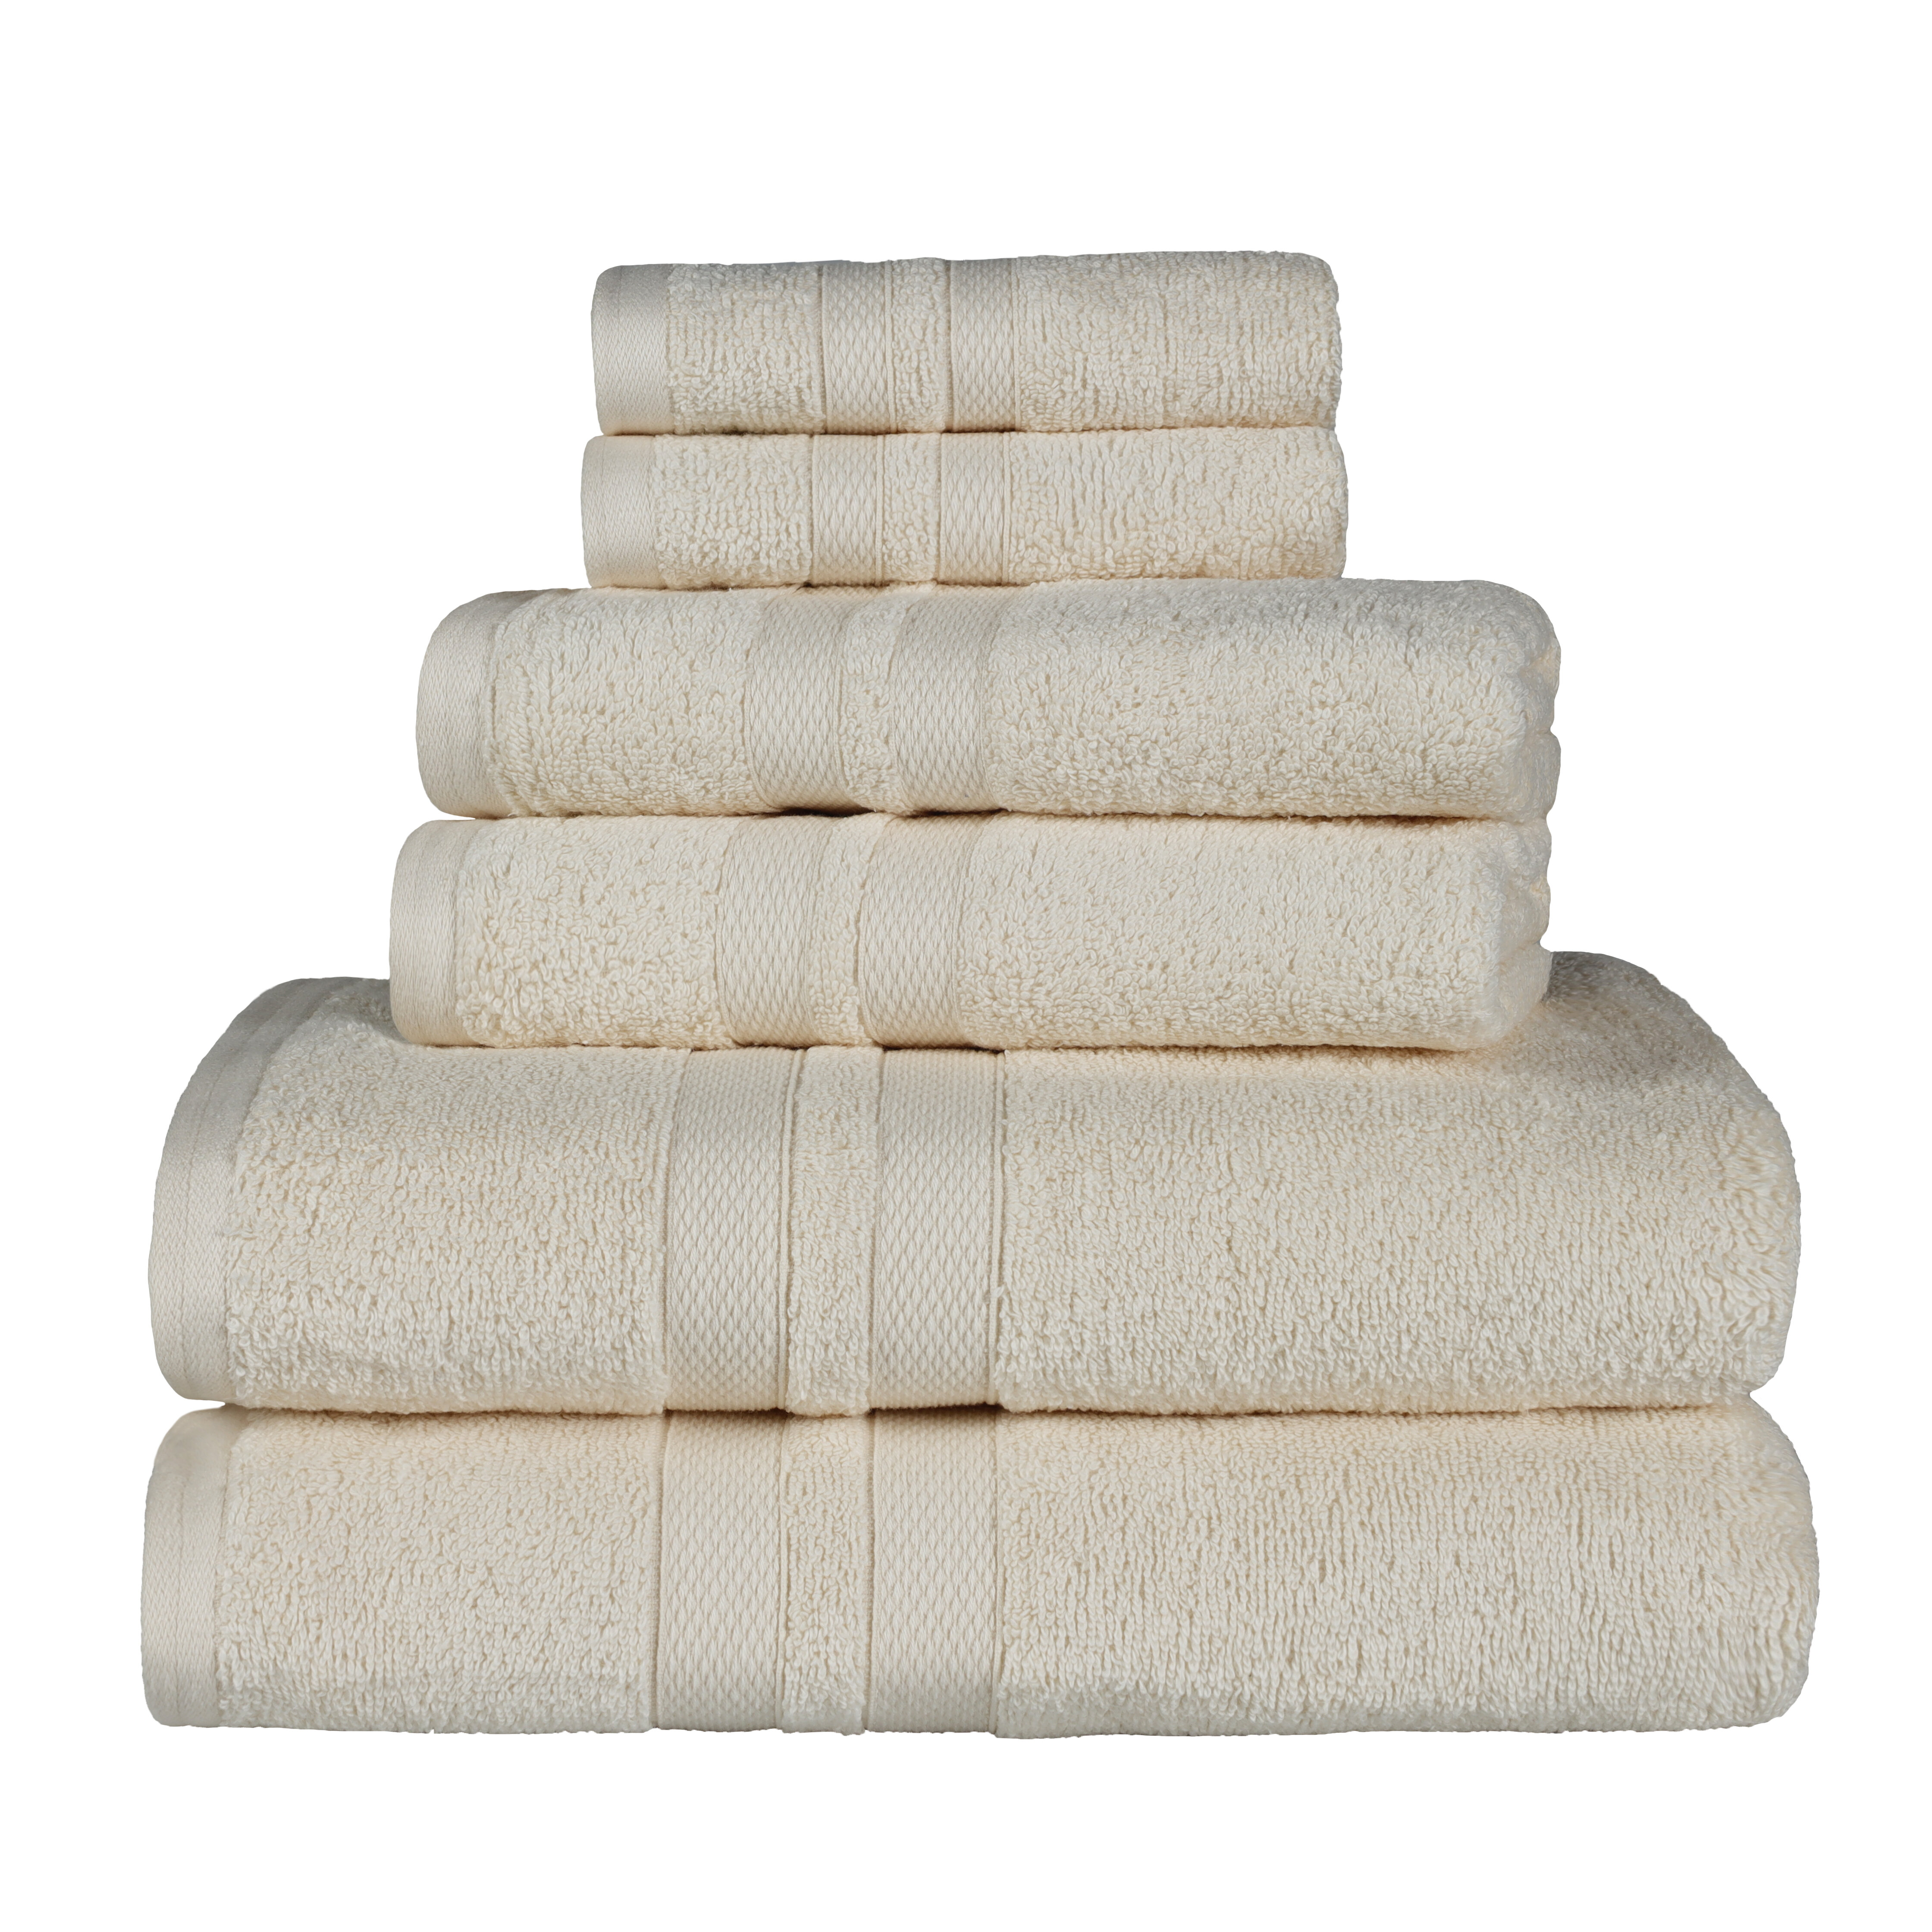 6 PIECE HIGH QUALITY TOWEL BALE SET SOFT SATIN BATH BATHROOM 100% COTTON TOWELS 